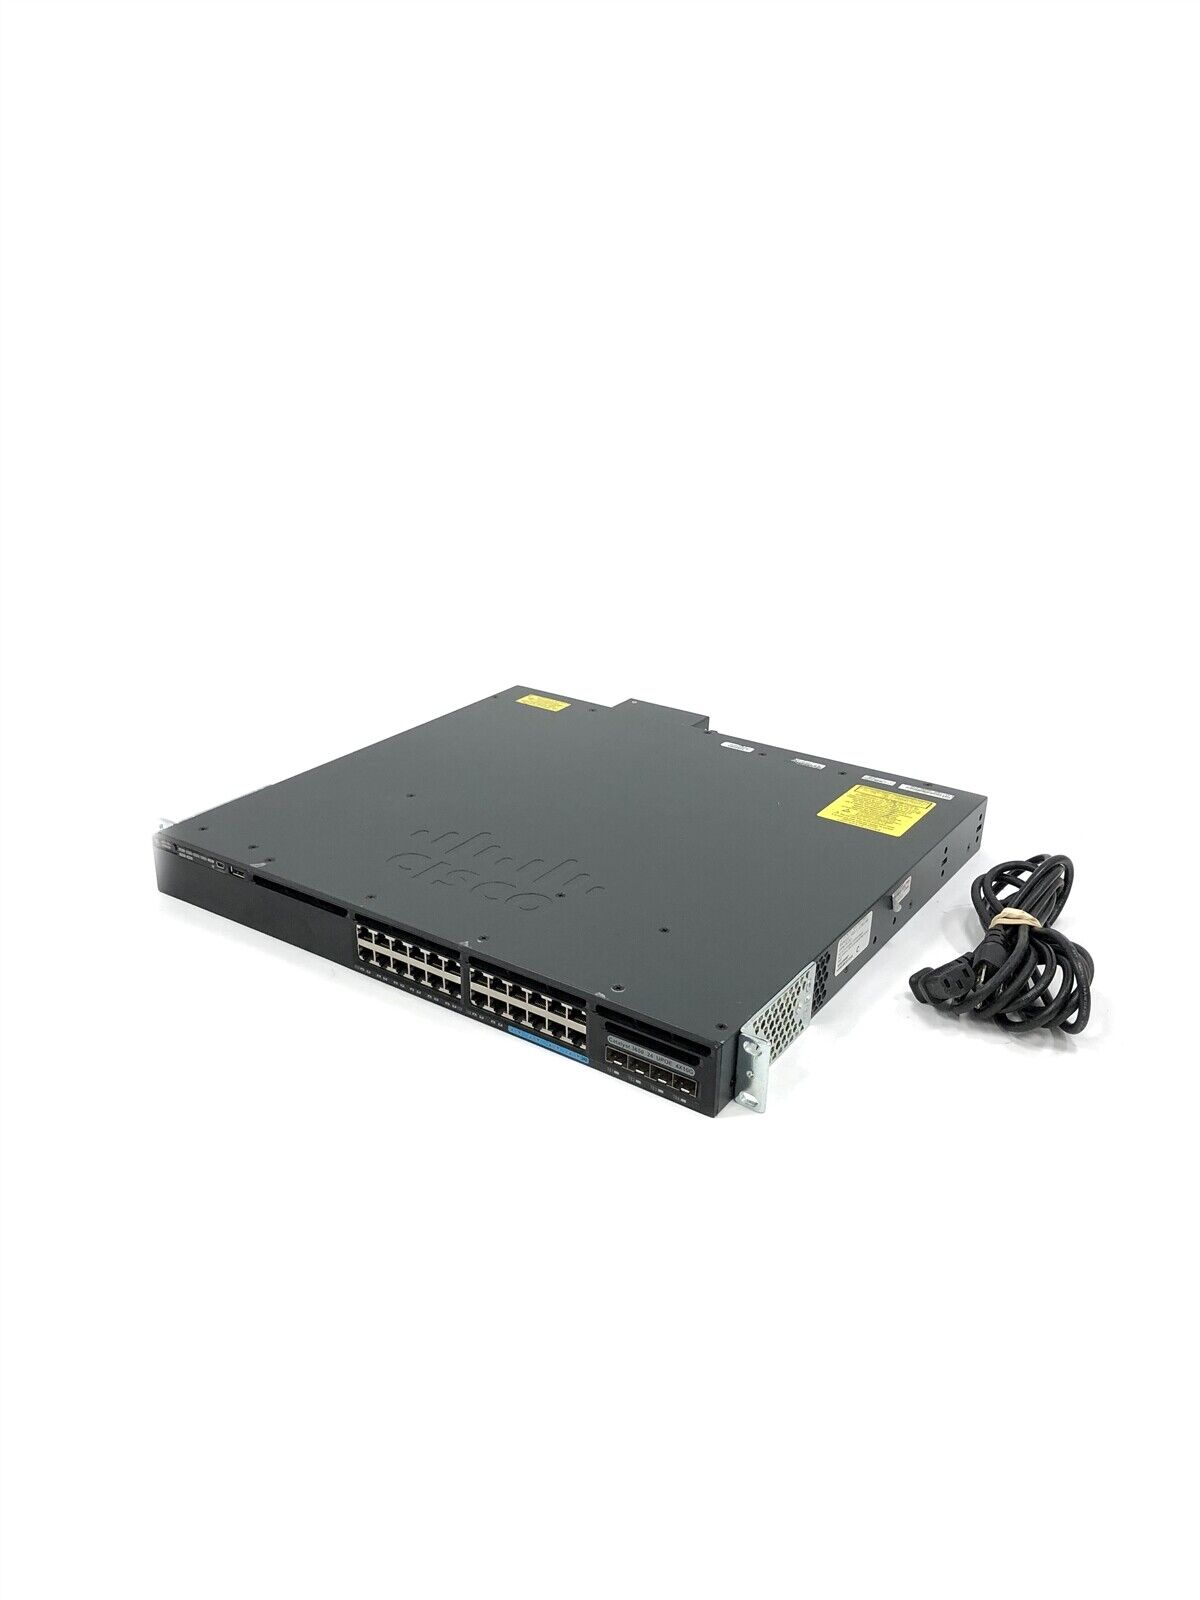 Cisco WS-C3650-8X24UQ-S 24x MultiGigabit UPOE 4x 10G SFP+ Switch - NO OS 